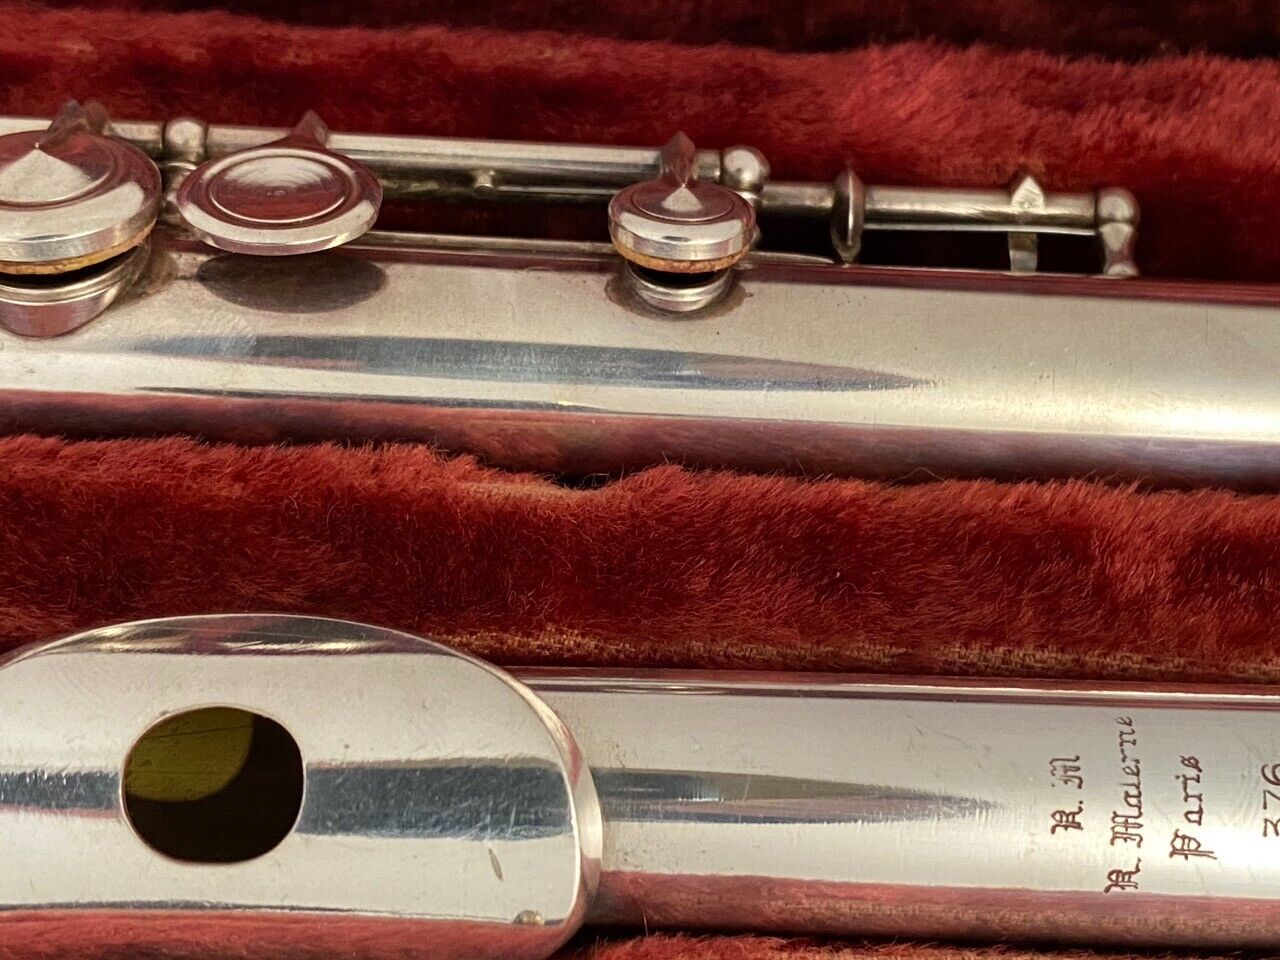 ::R. MALERNE Paris 376 Flute 1940's? - Silver plated maillechort